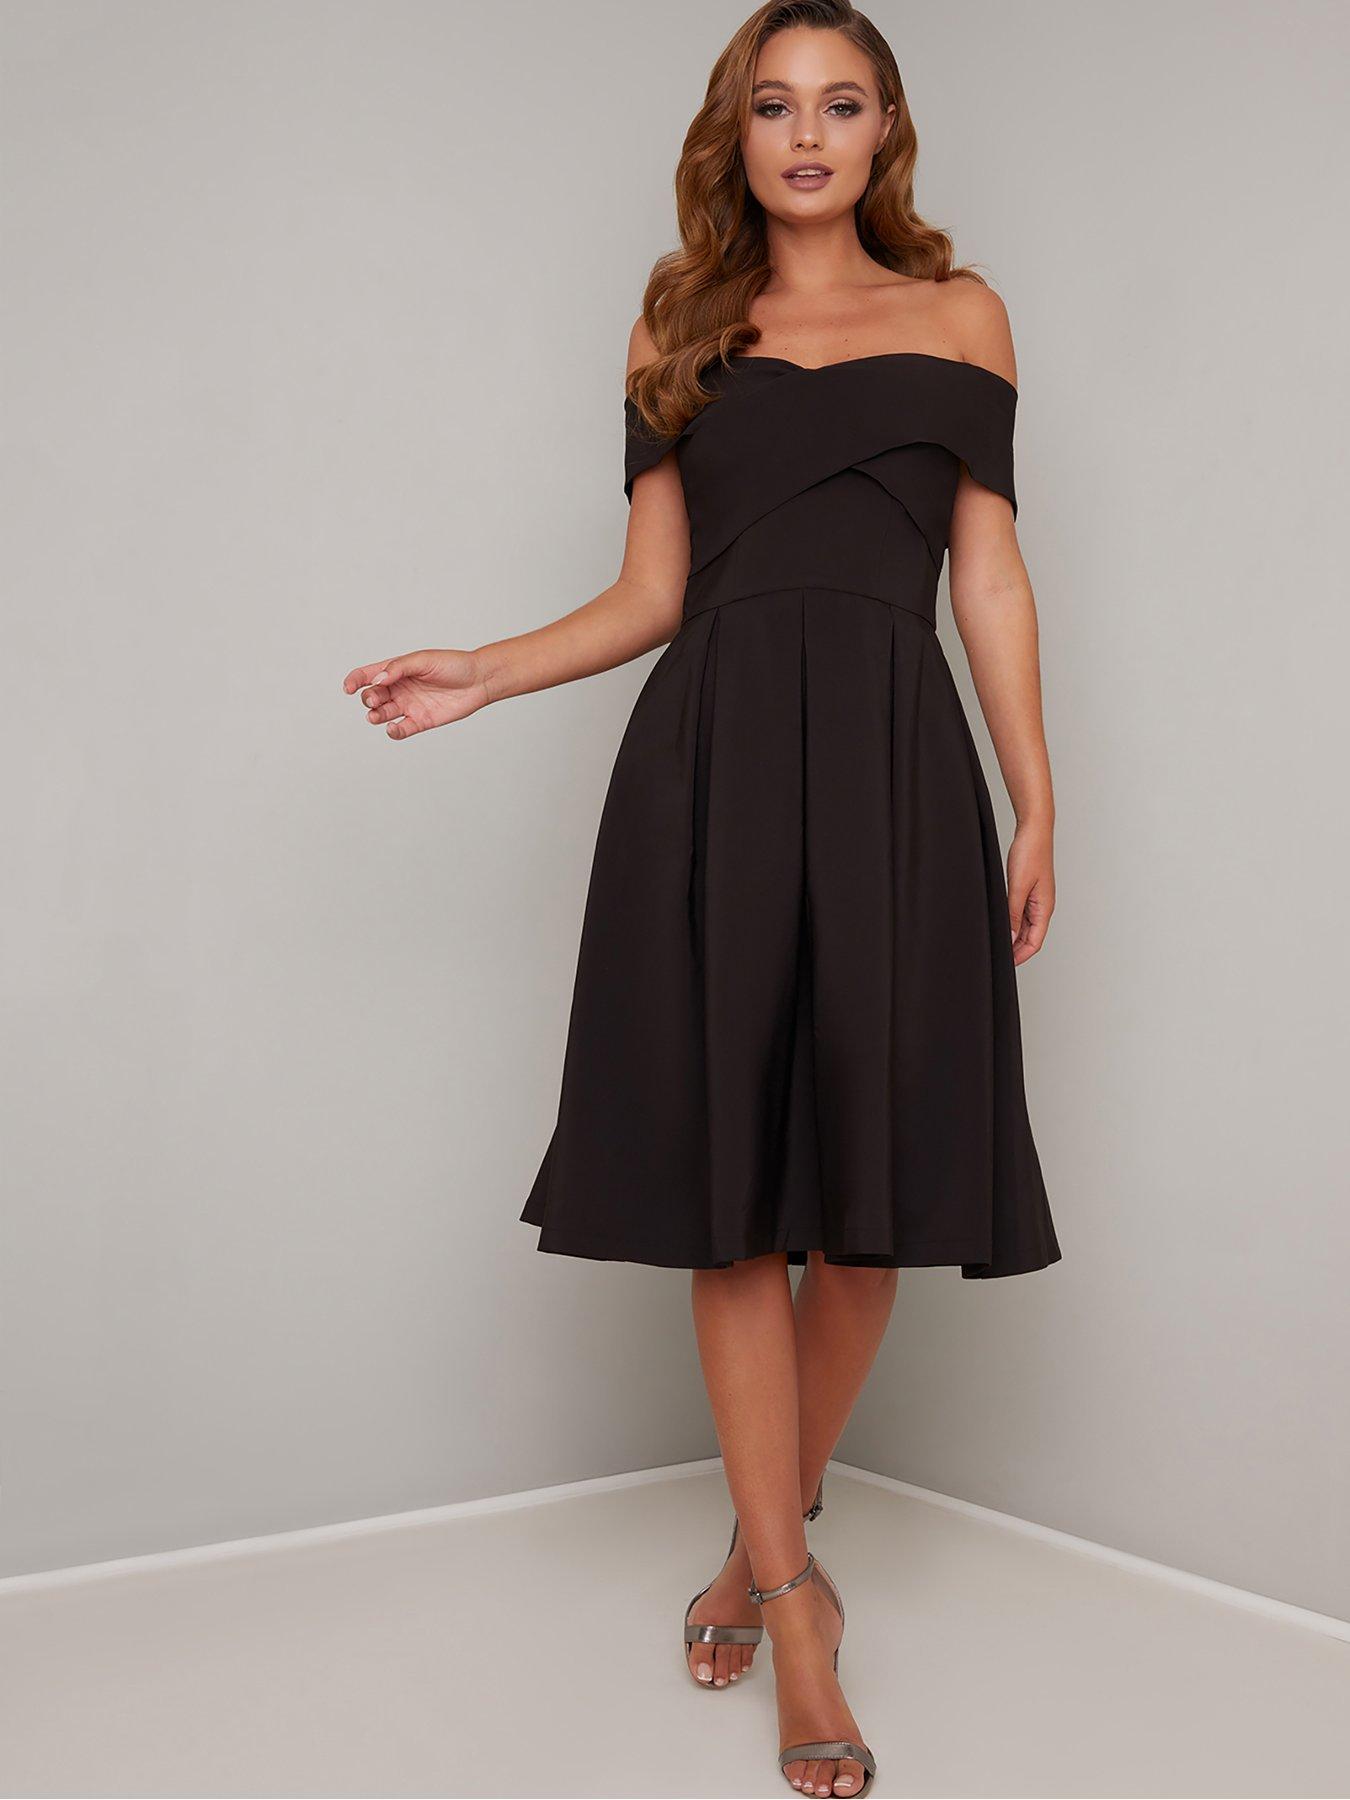 ebay long black dress